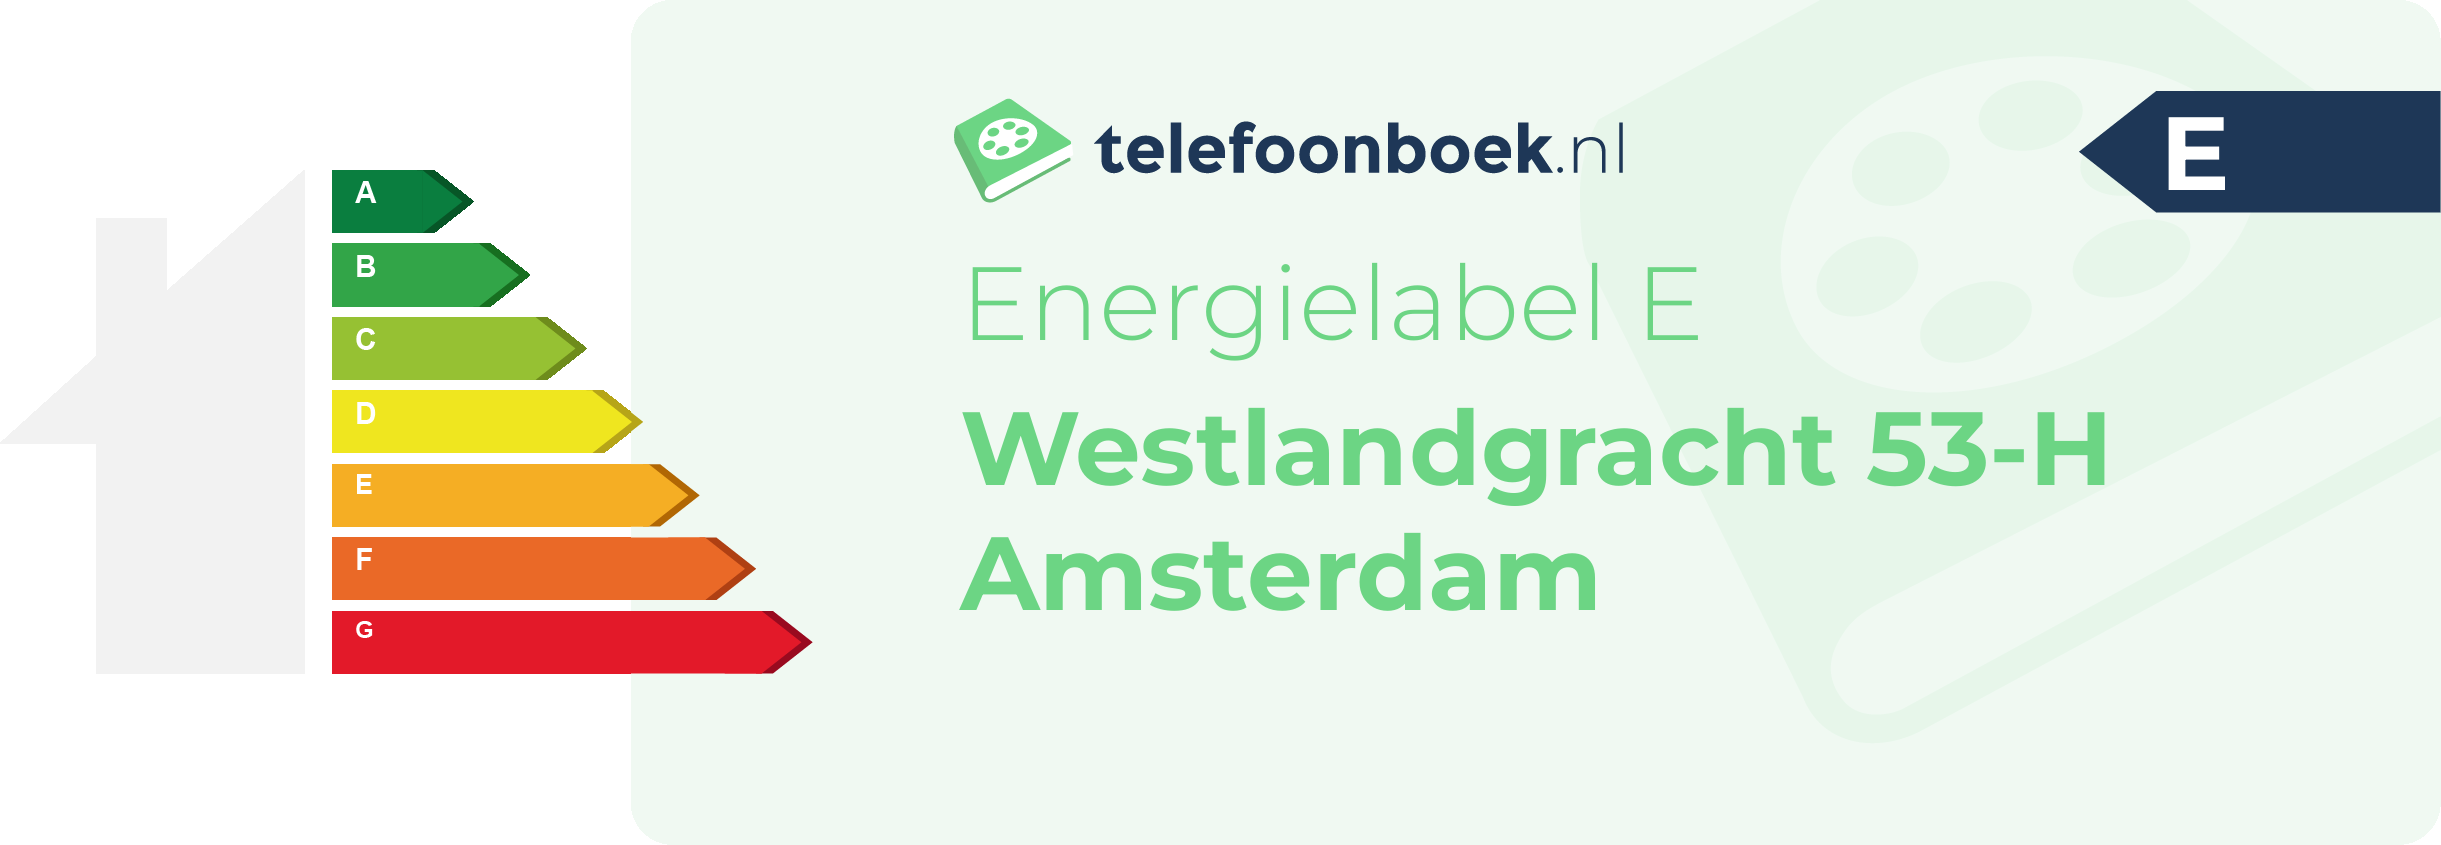 Energielabel Westlandgracht 53-H Amsterdam